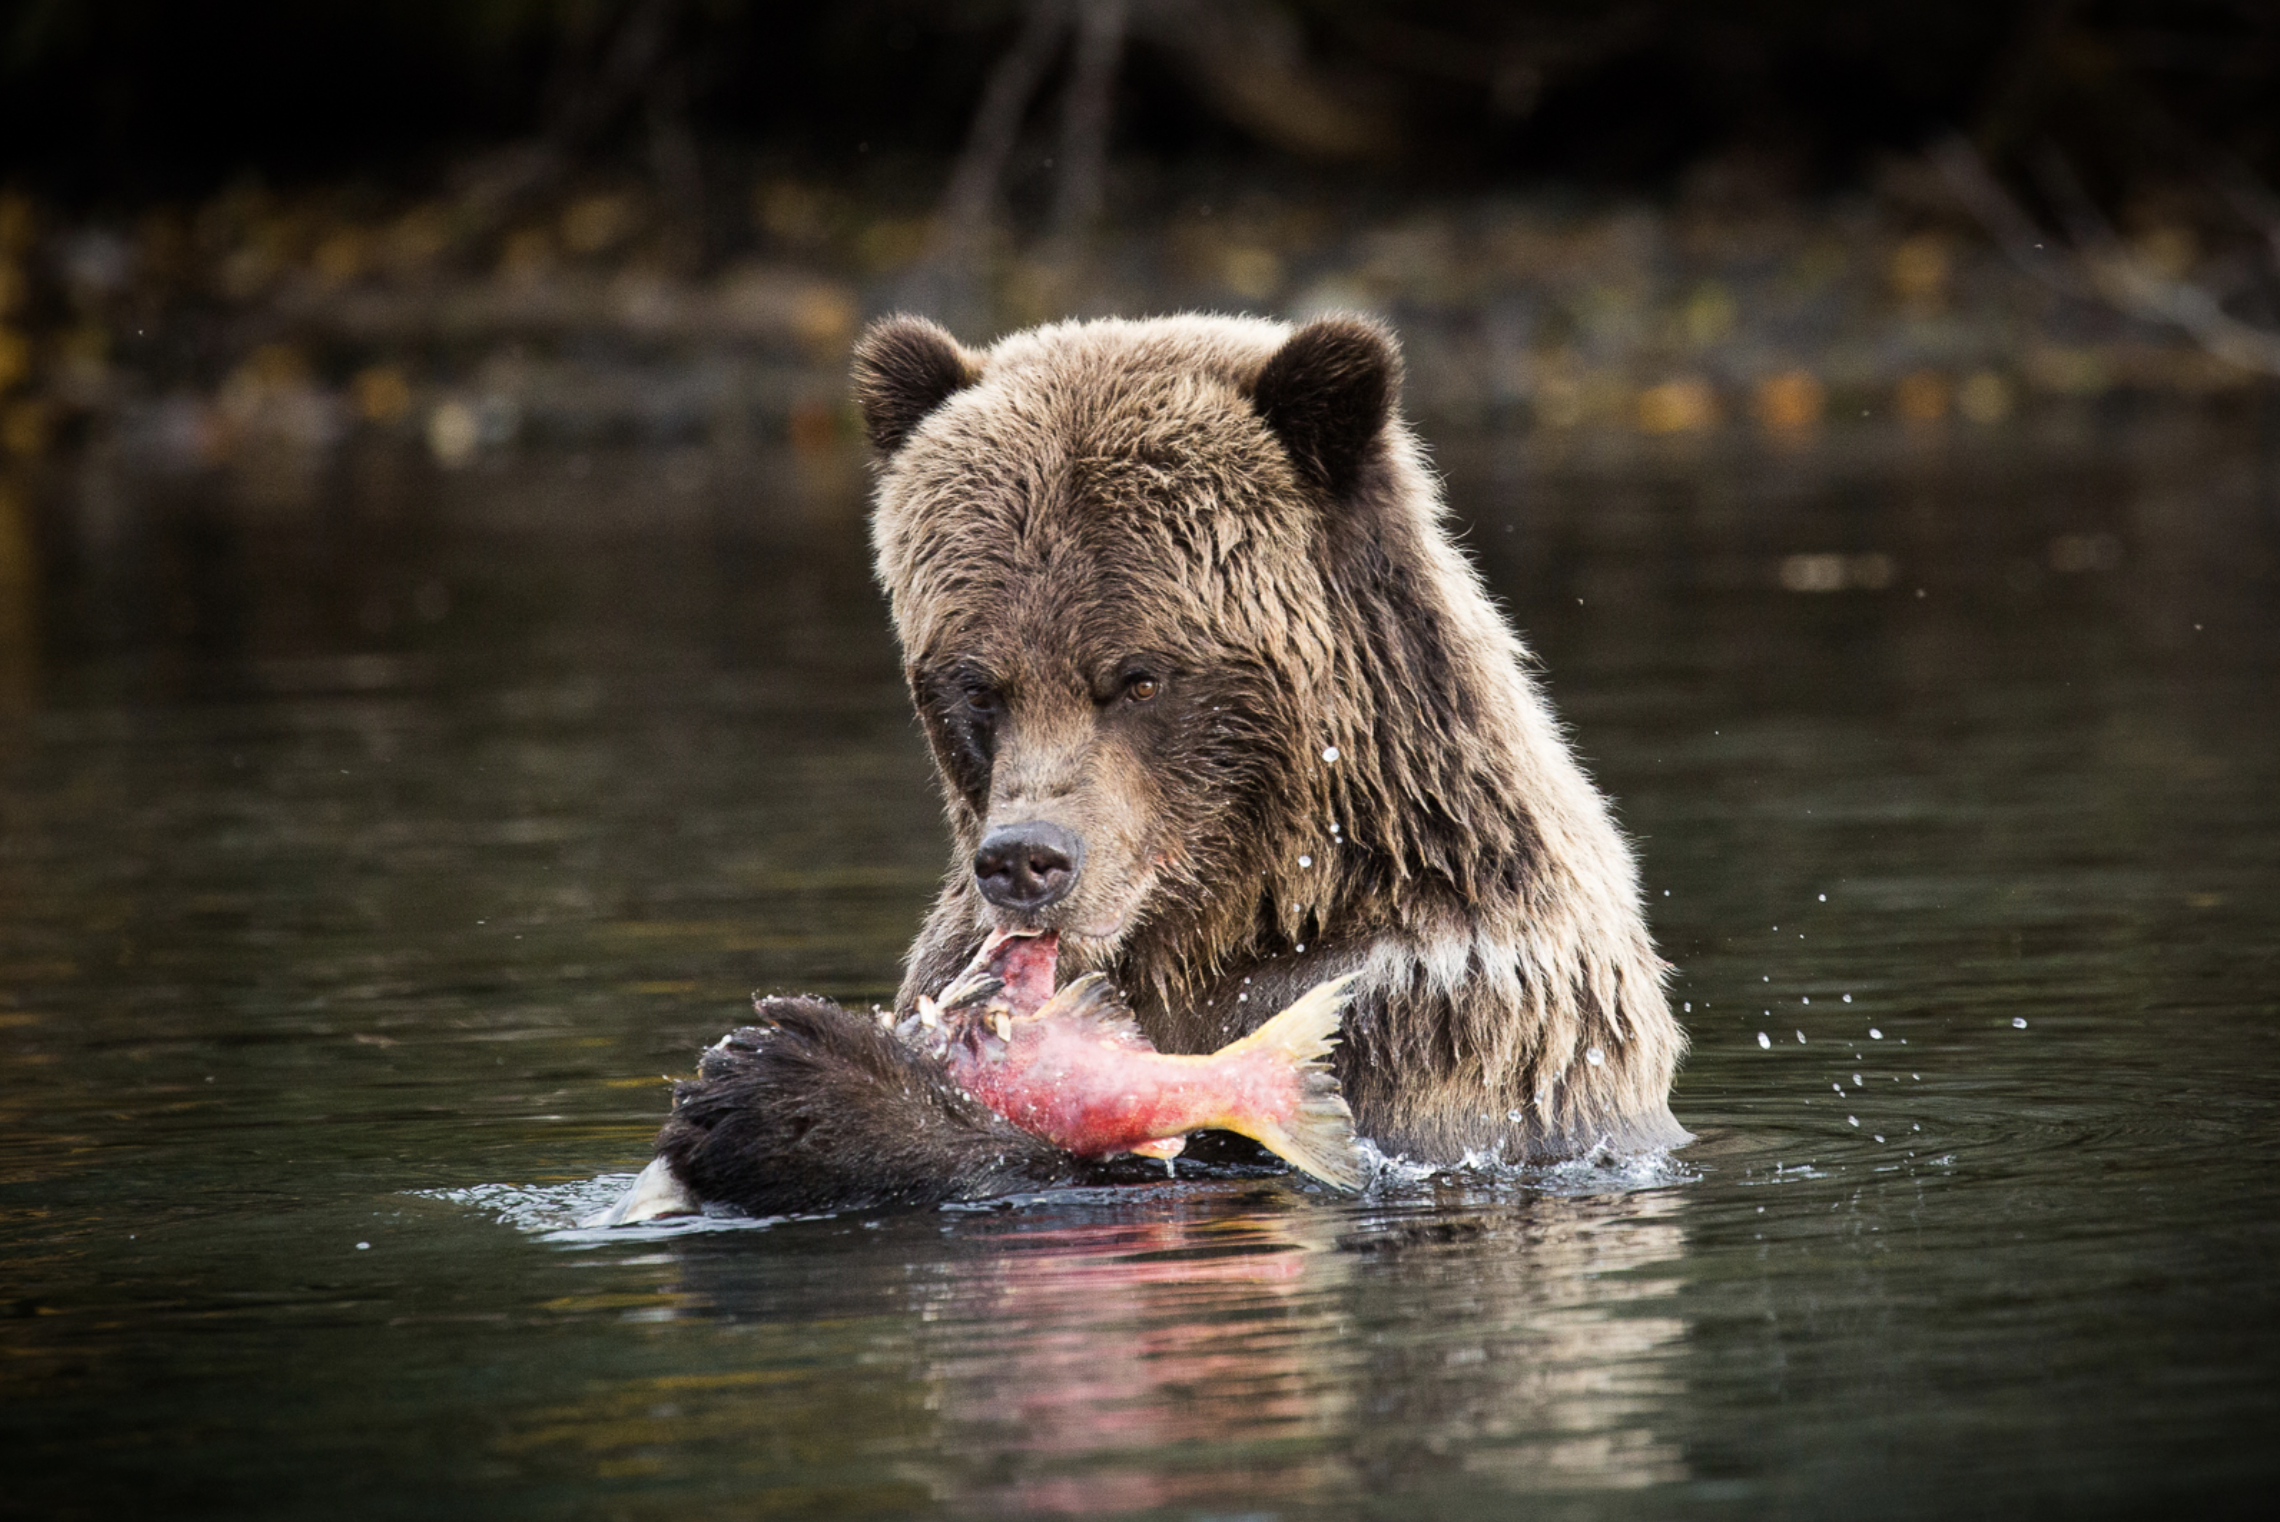 Where Indigenous knowledge meets western science – salmon, bears, and n̓àn̓akila